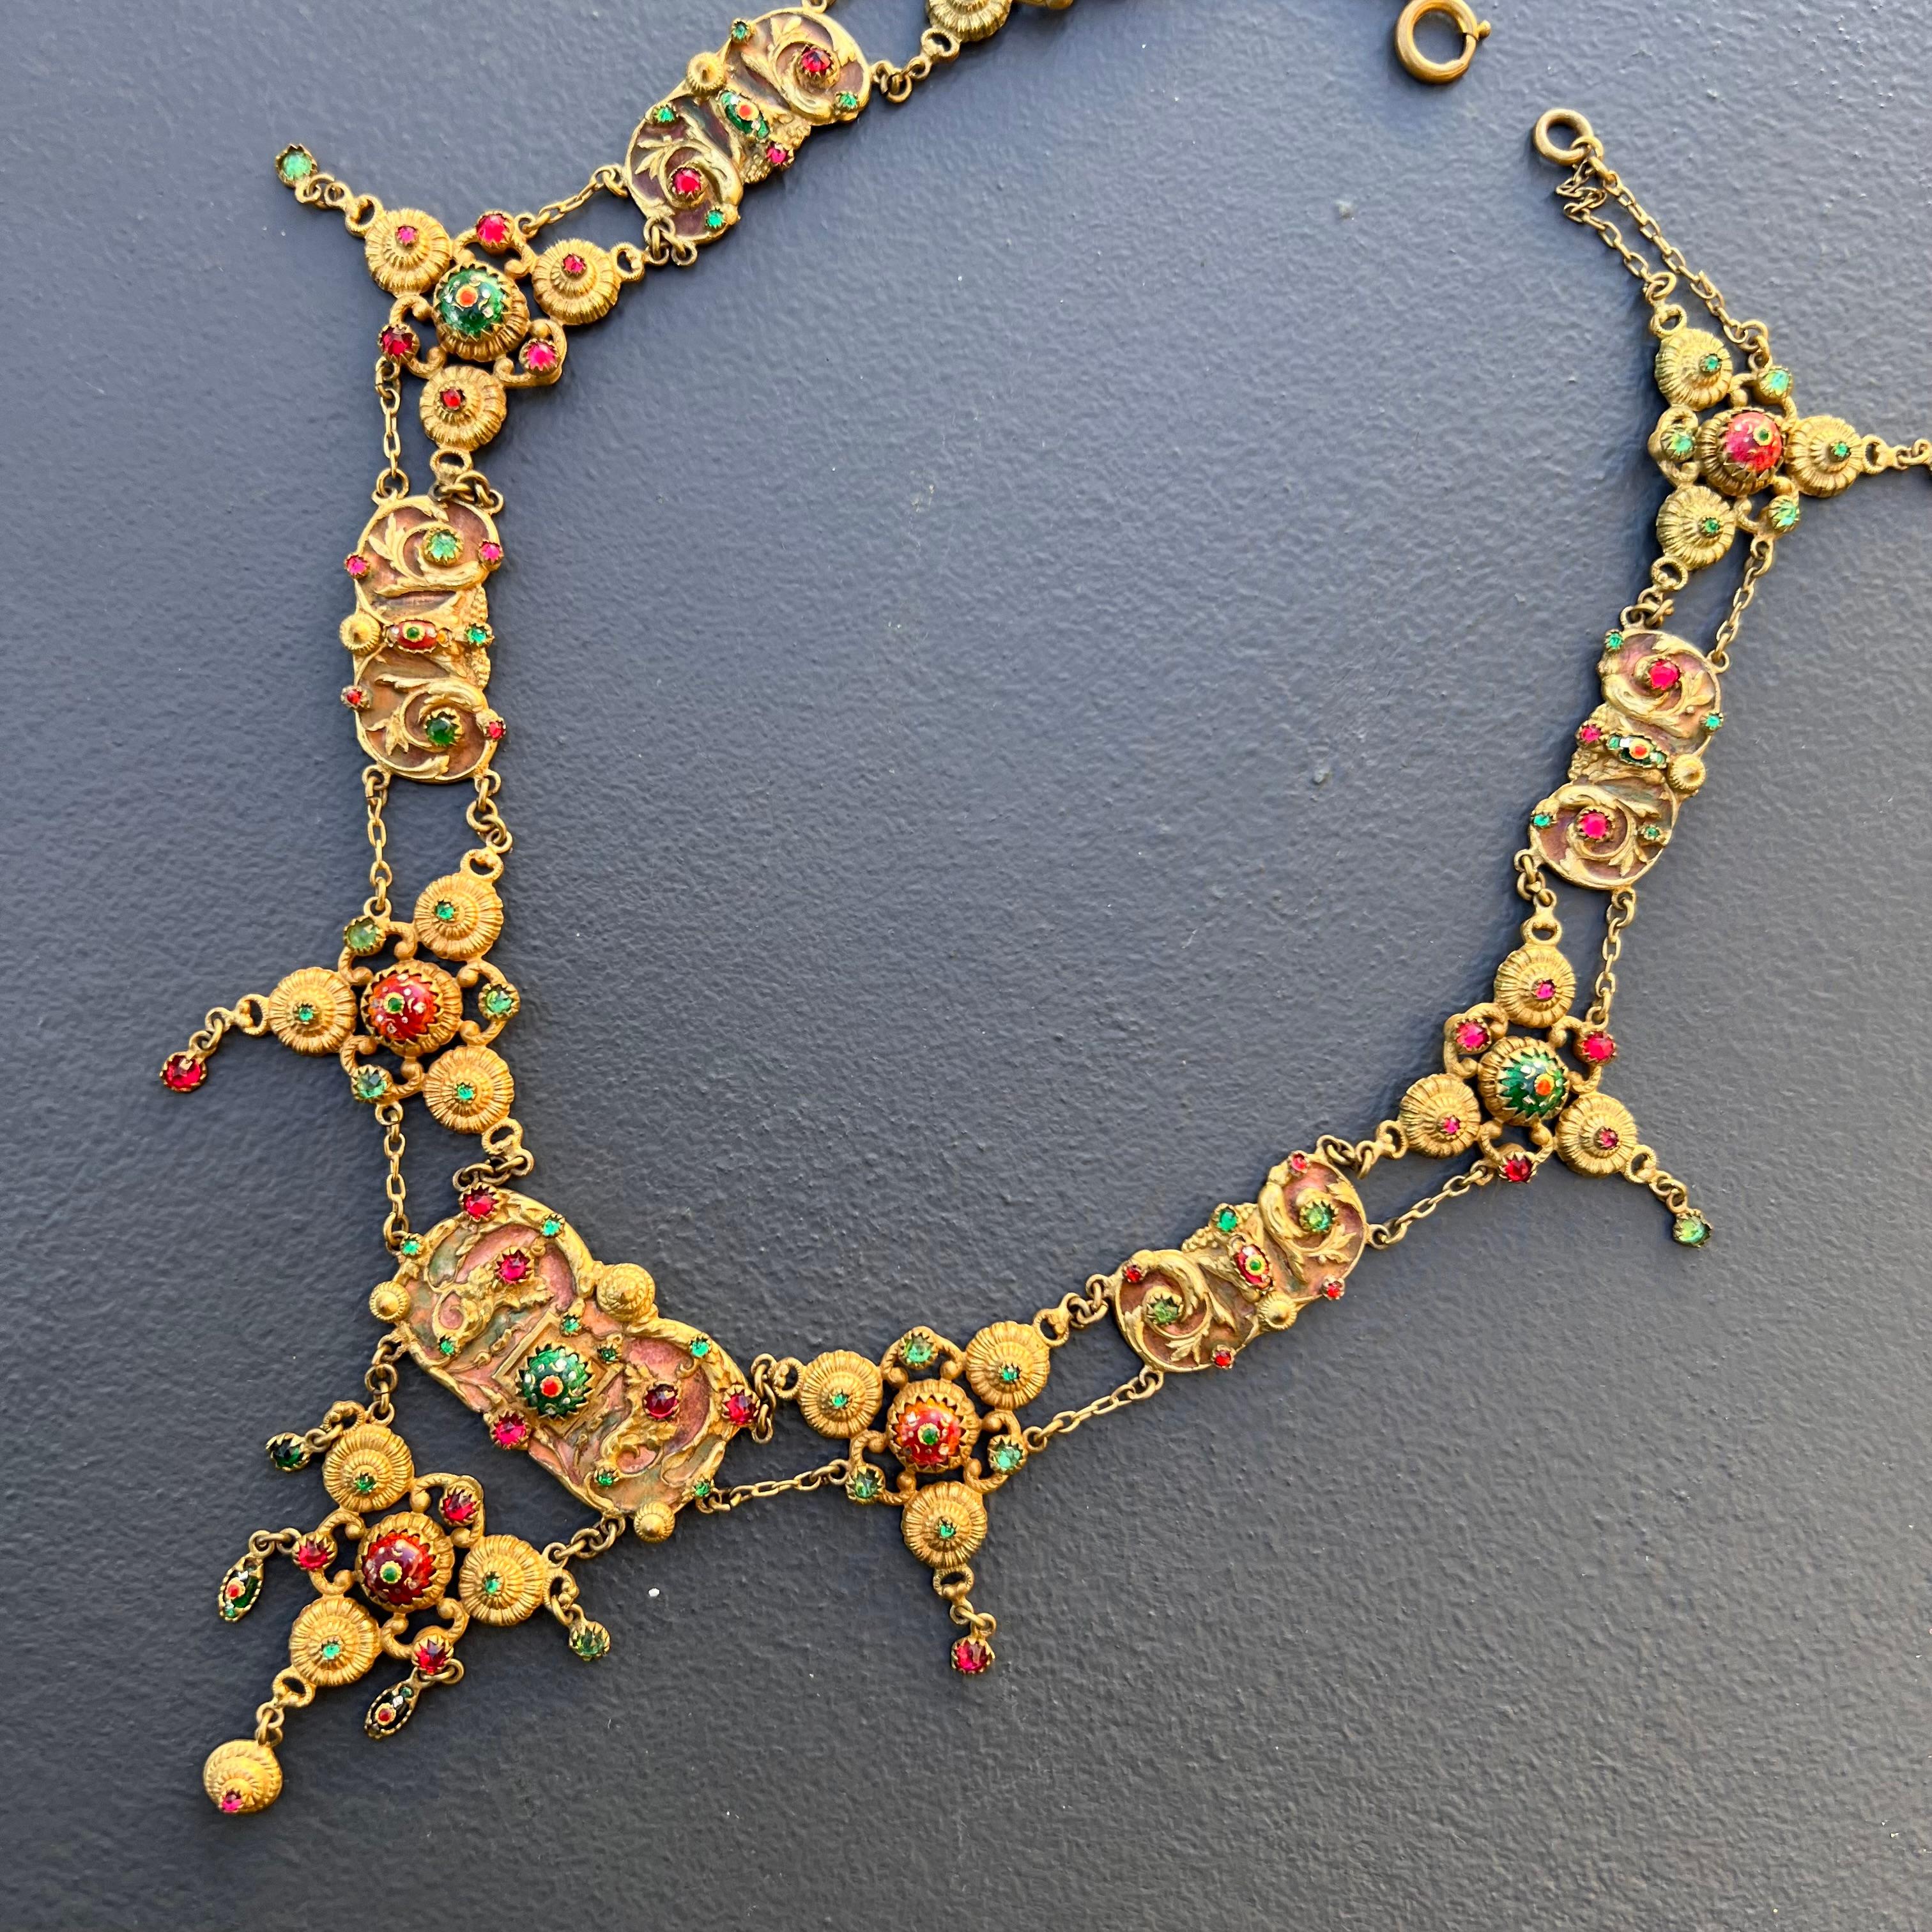 Antique Art Nouveau French Bresse Bressan Festoon Necklace In Good Condition For Sale In Plainsboro, NJ